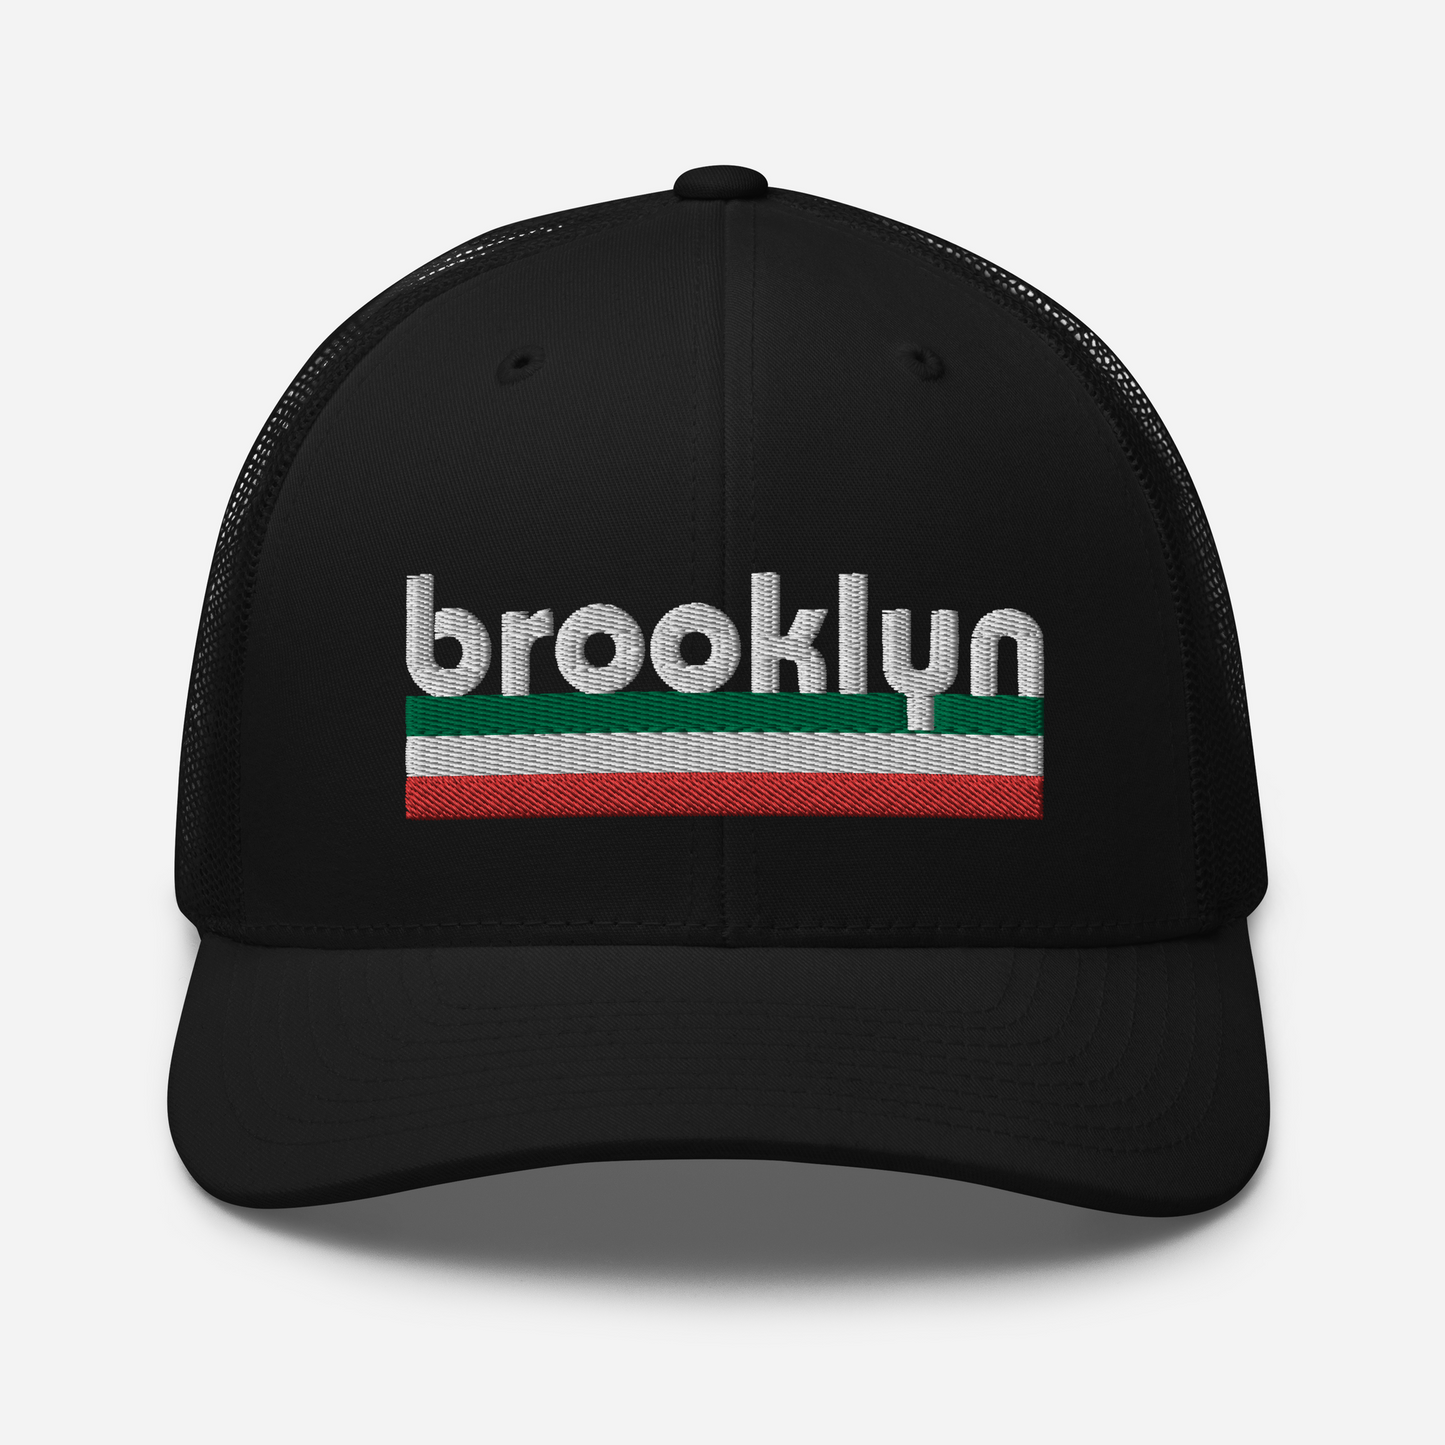 Brooklyn Italian Pride Trucker Hat- Stylish Urban Headwear with Italian Flair